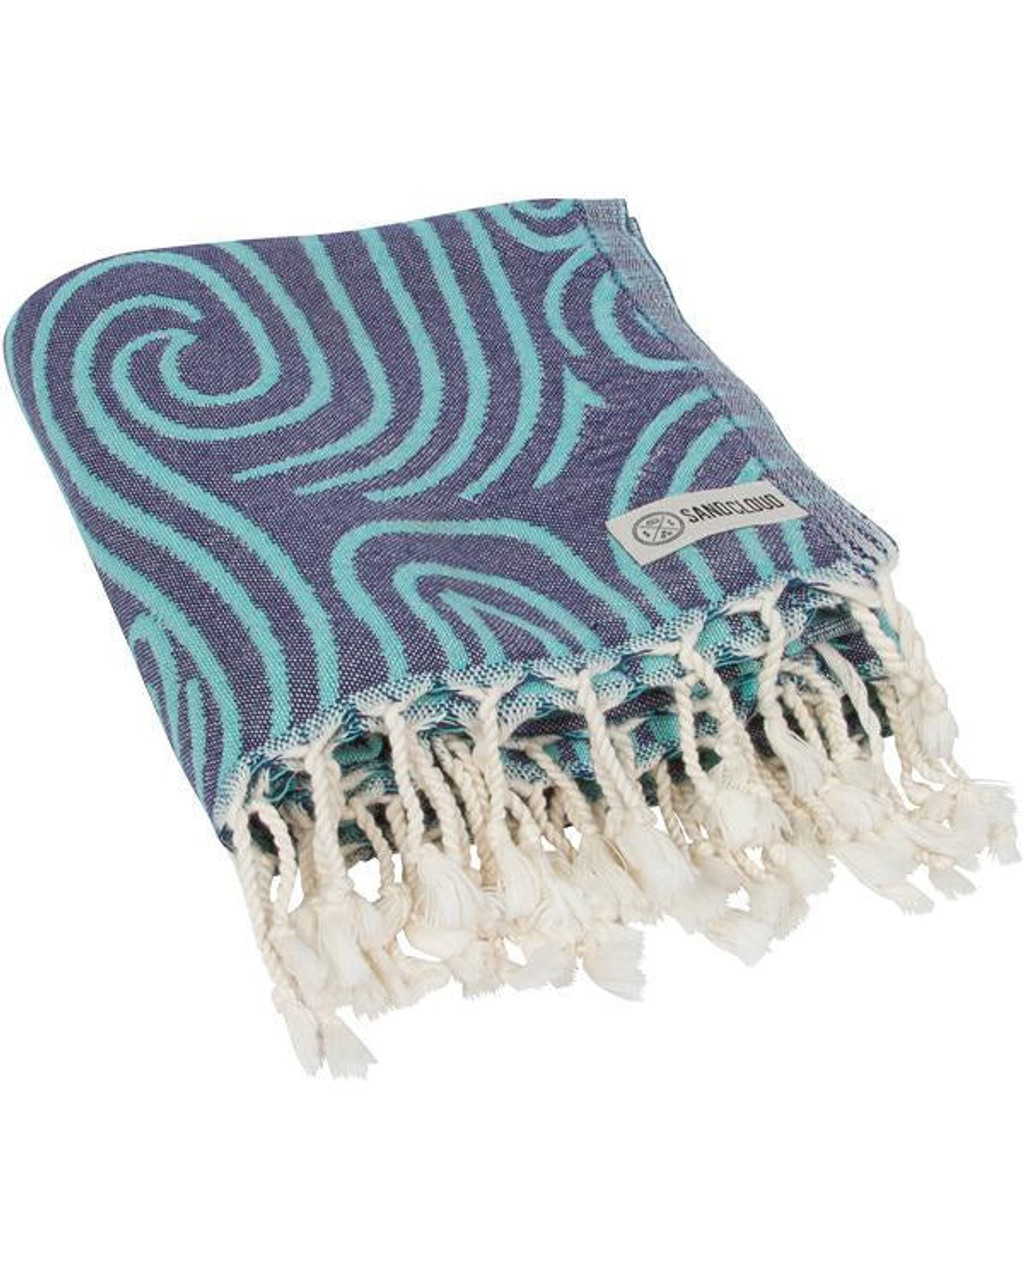 Sand Cloud 100% Turkish Organic Cotton Towel - Mint Swirl Turtle - 38x64